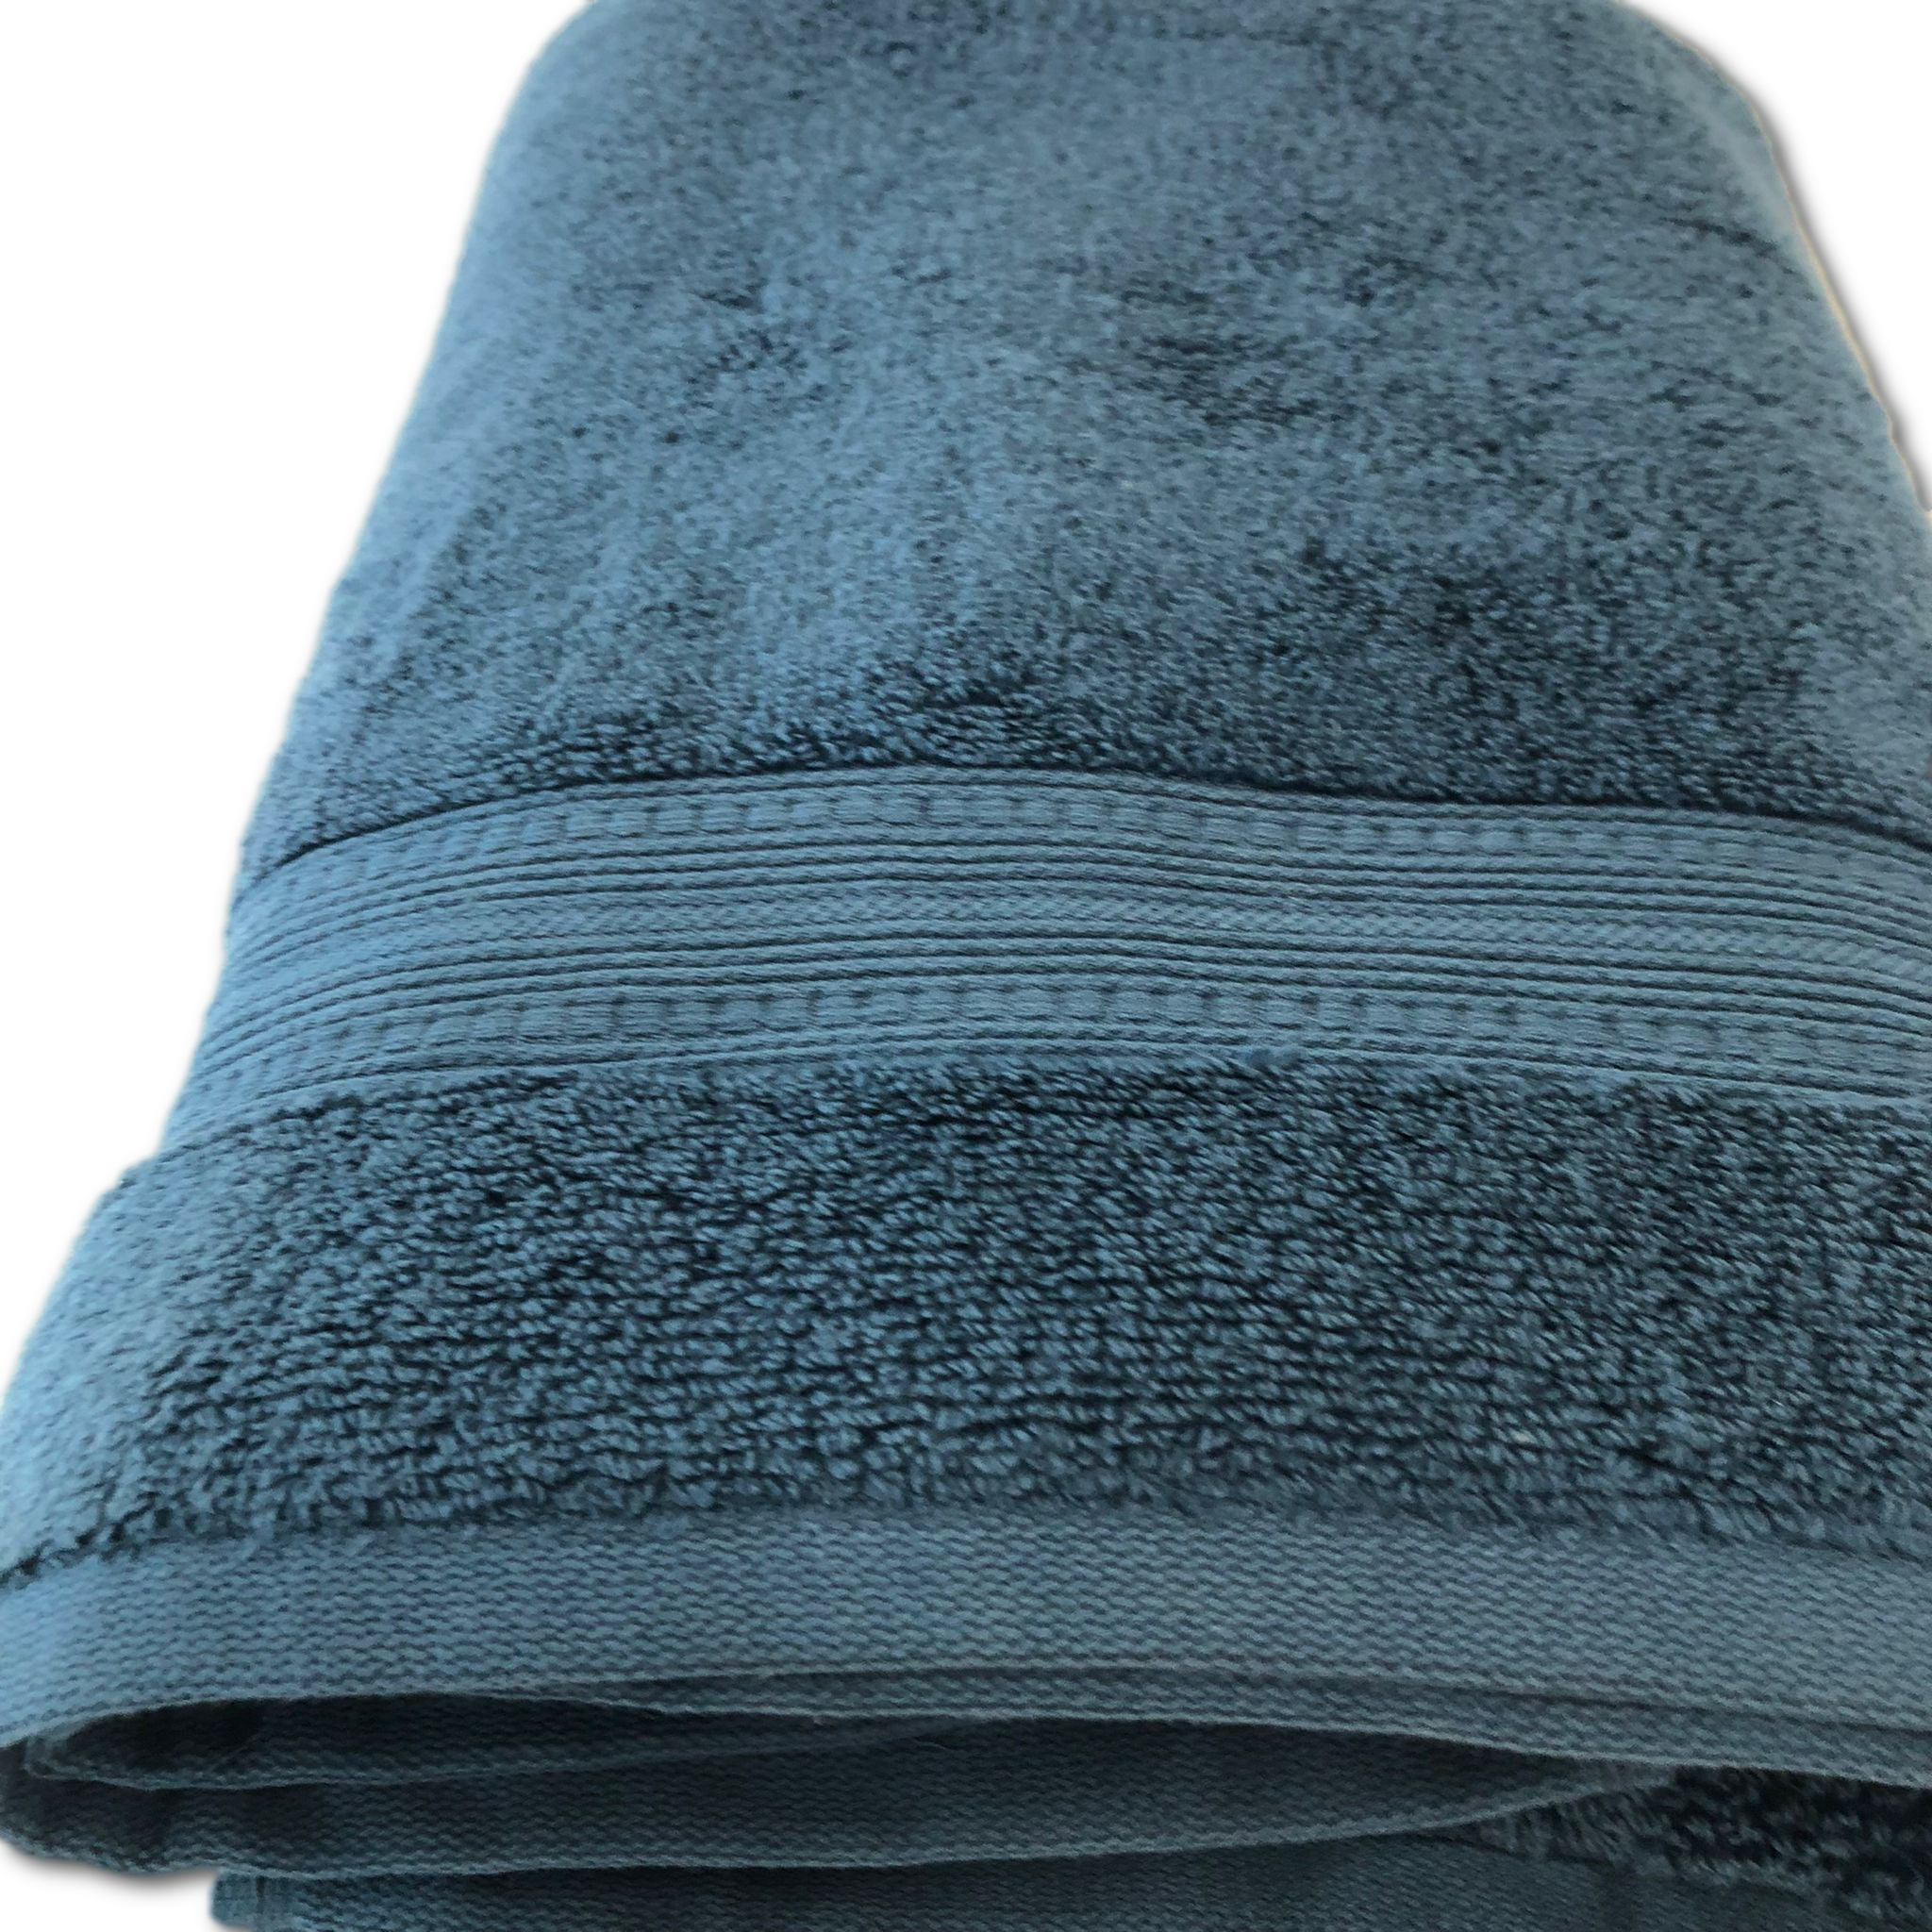 Grandeur Hospitality Bath Towel 3 Pack 34 x 54 100% Cotton 3 Pack